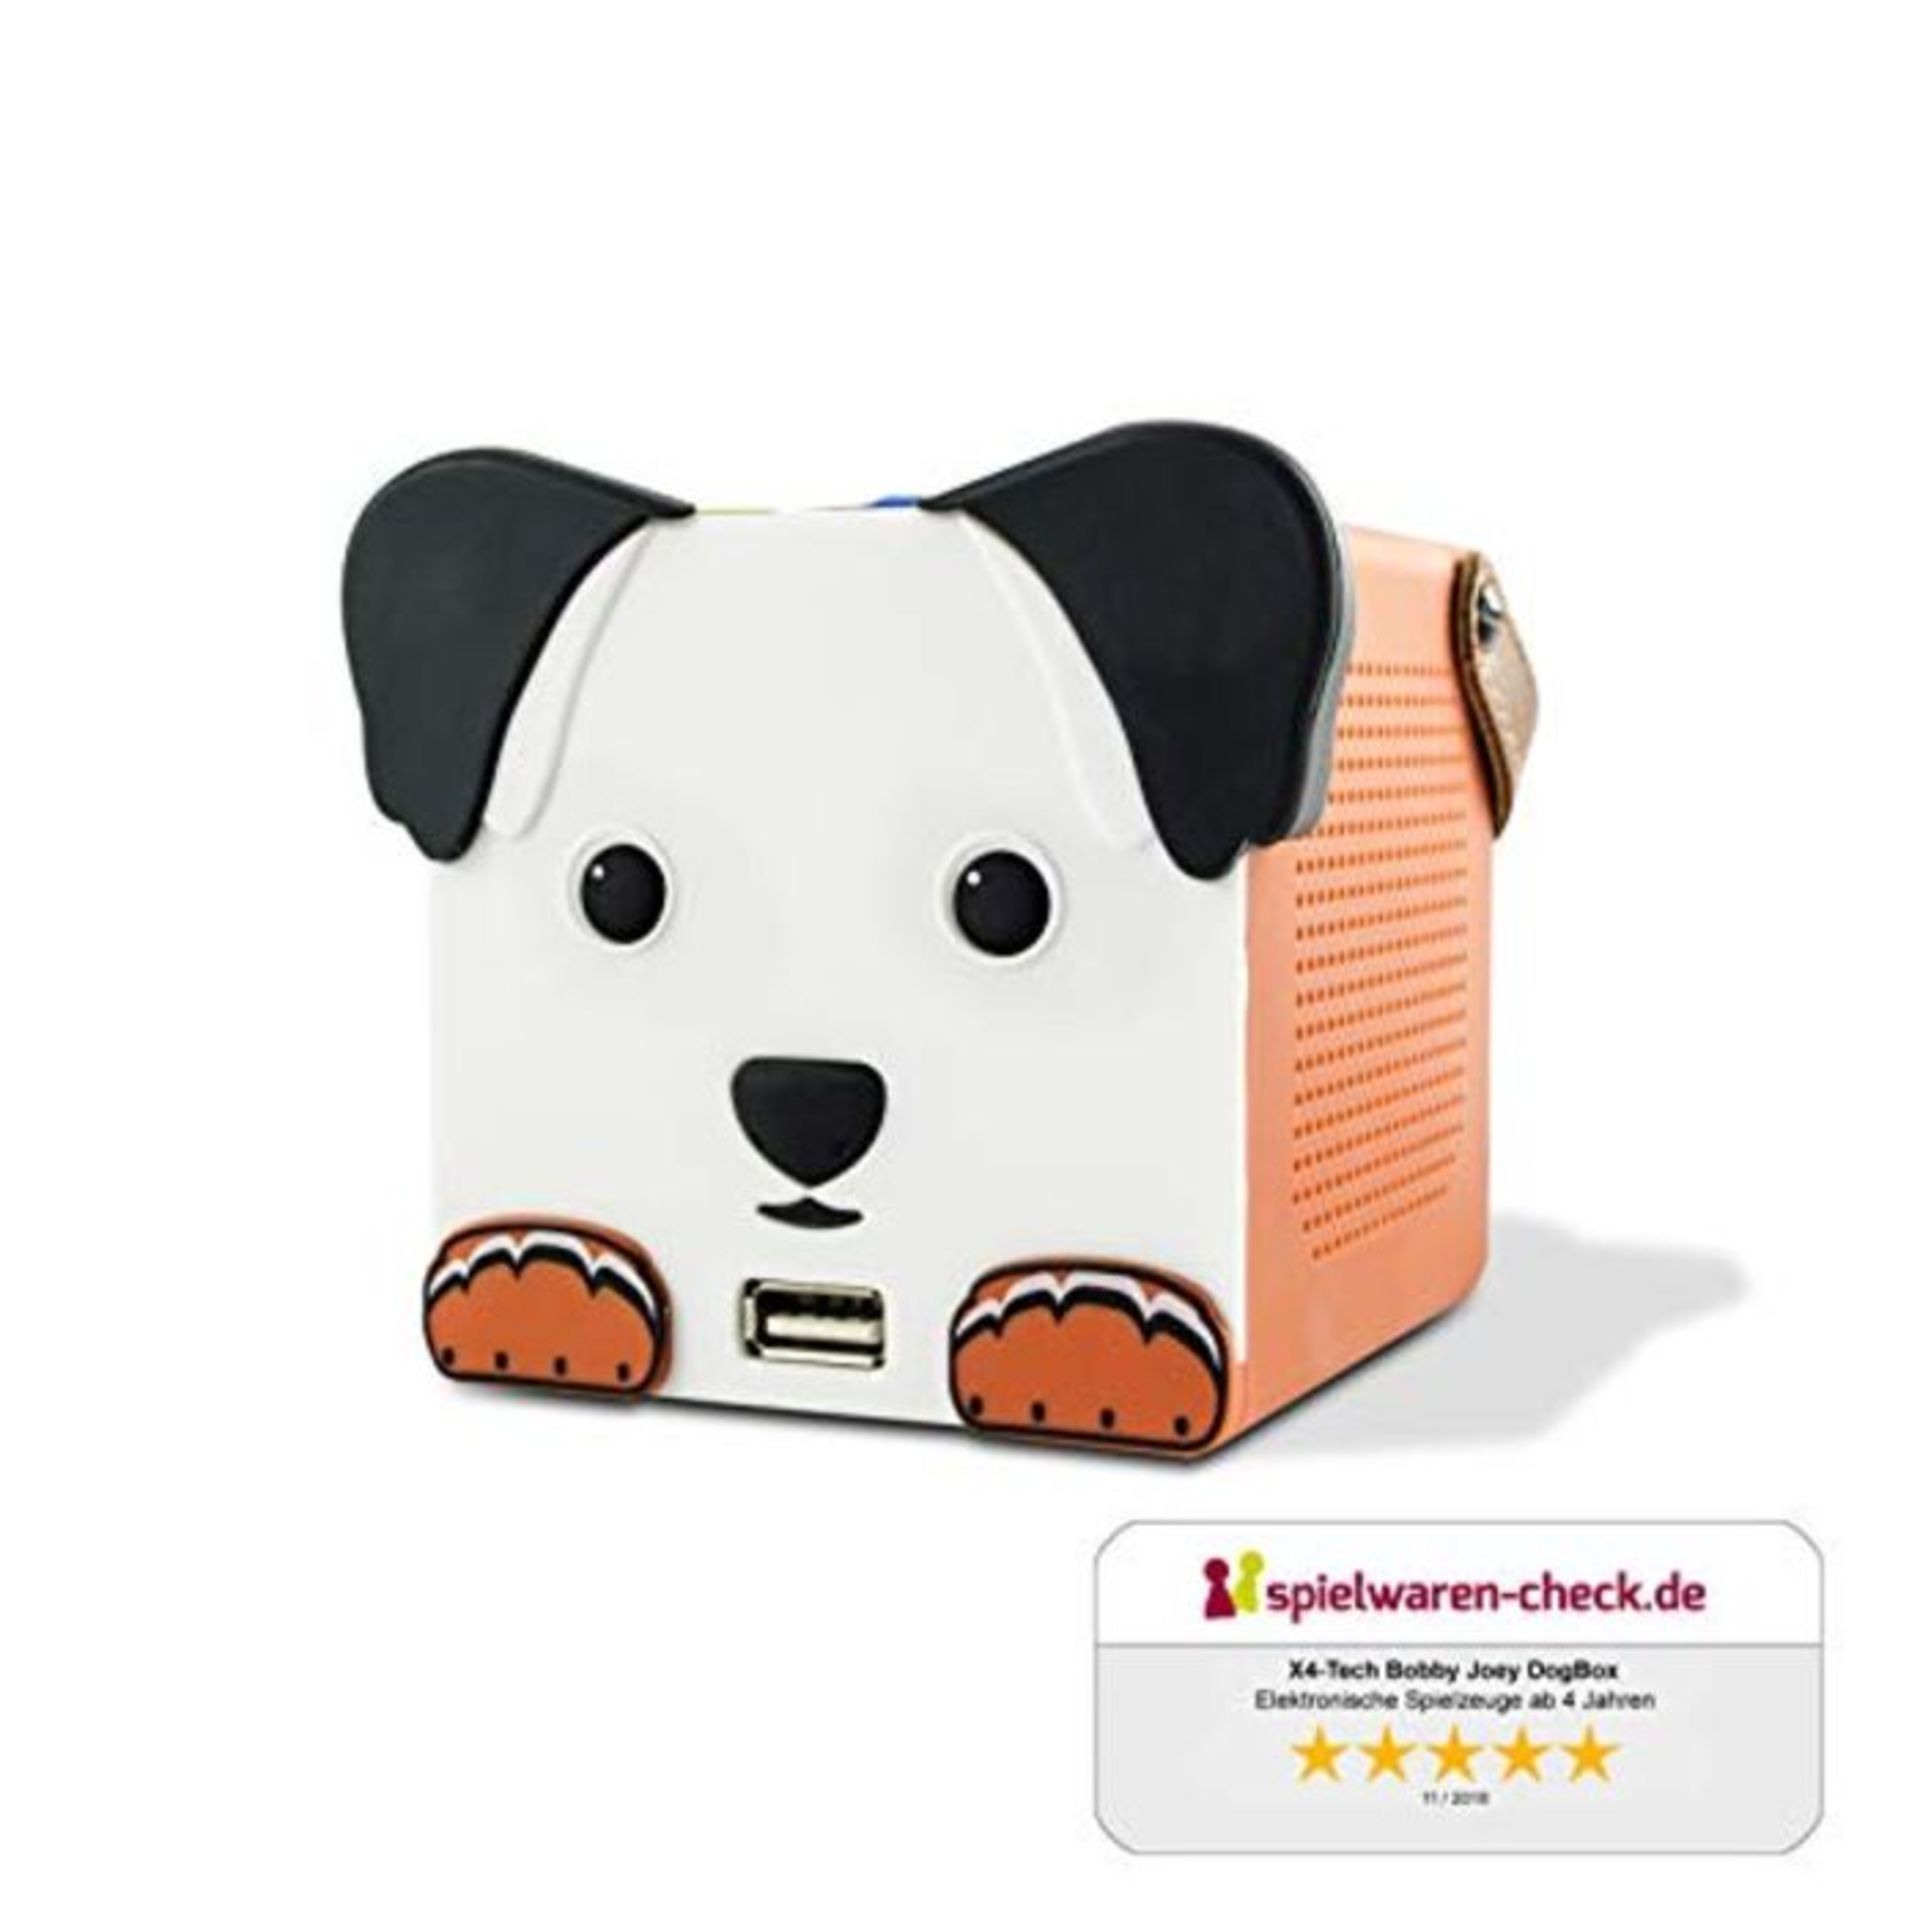 X4-TECH DogBox - Bluetooth Speaker for Children in a Cute Dog Design - USB and SD Card